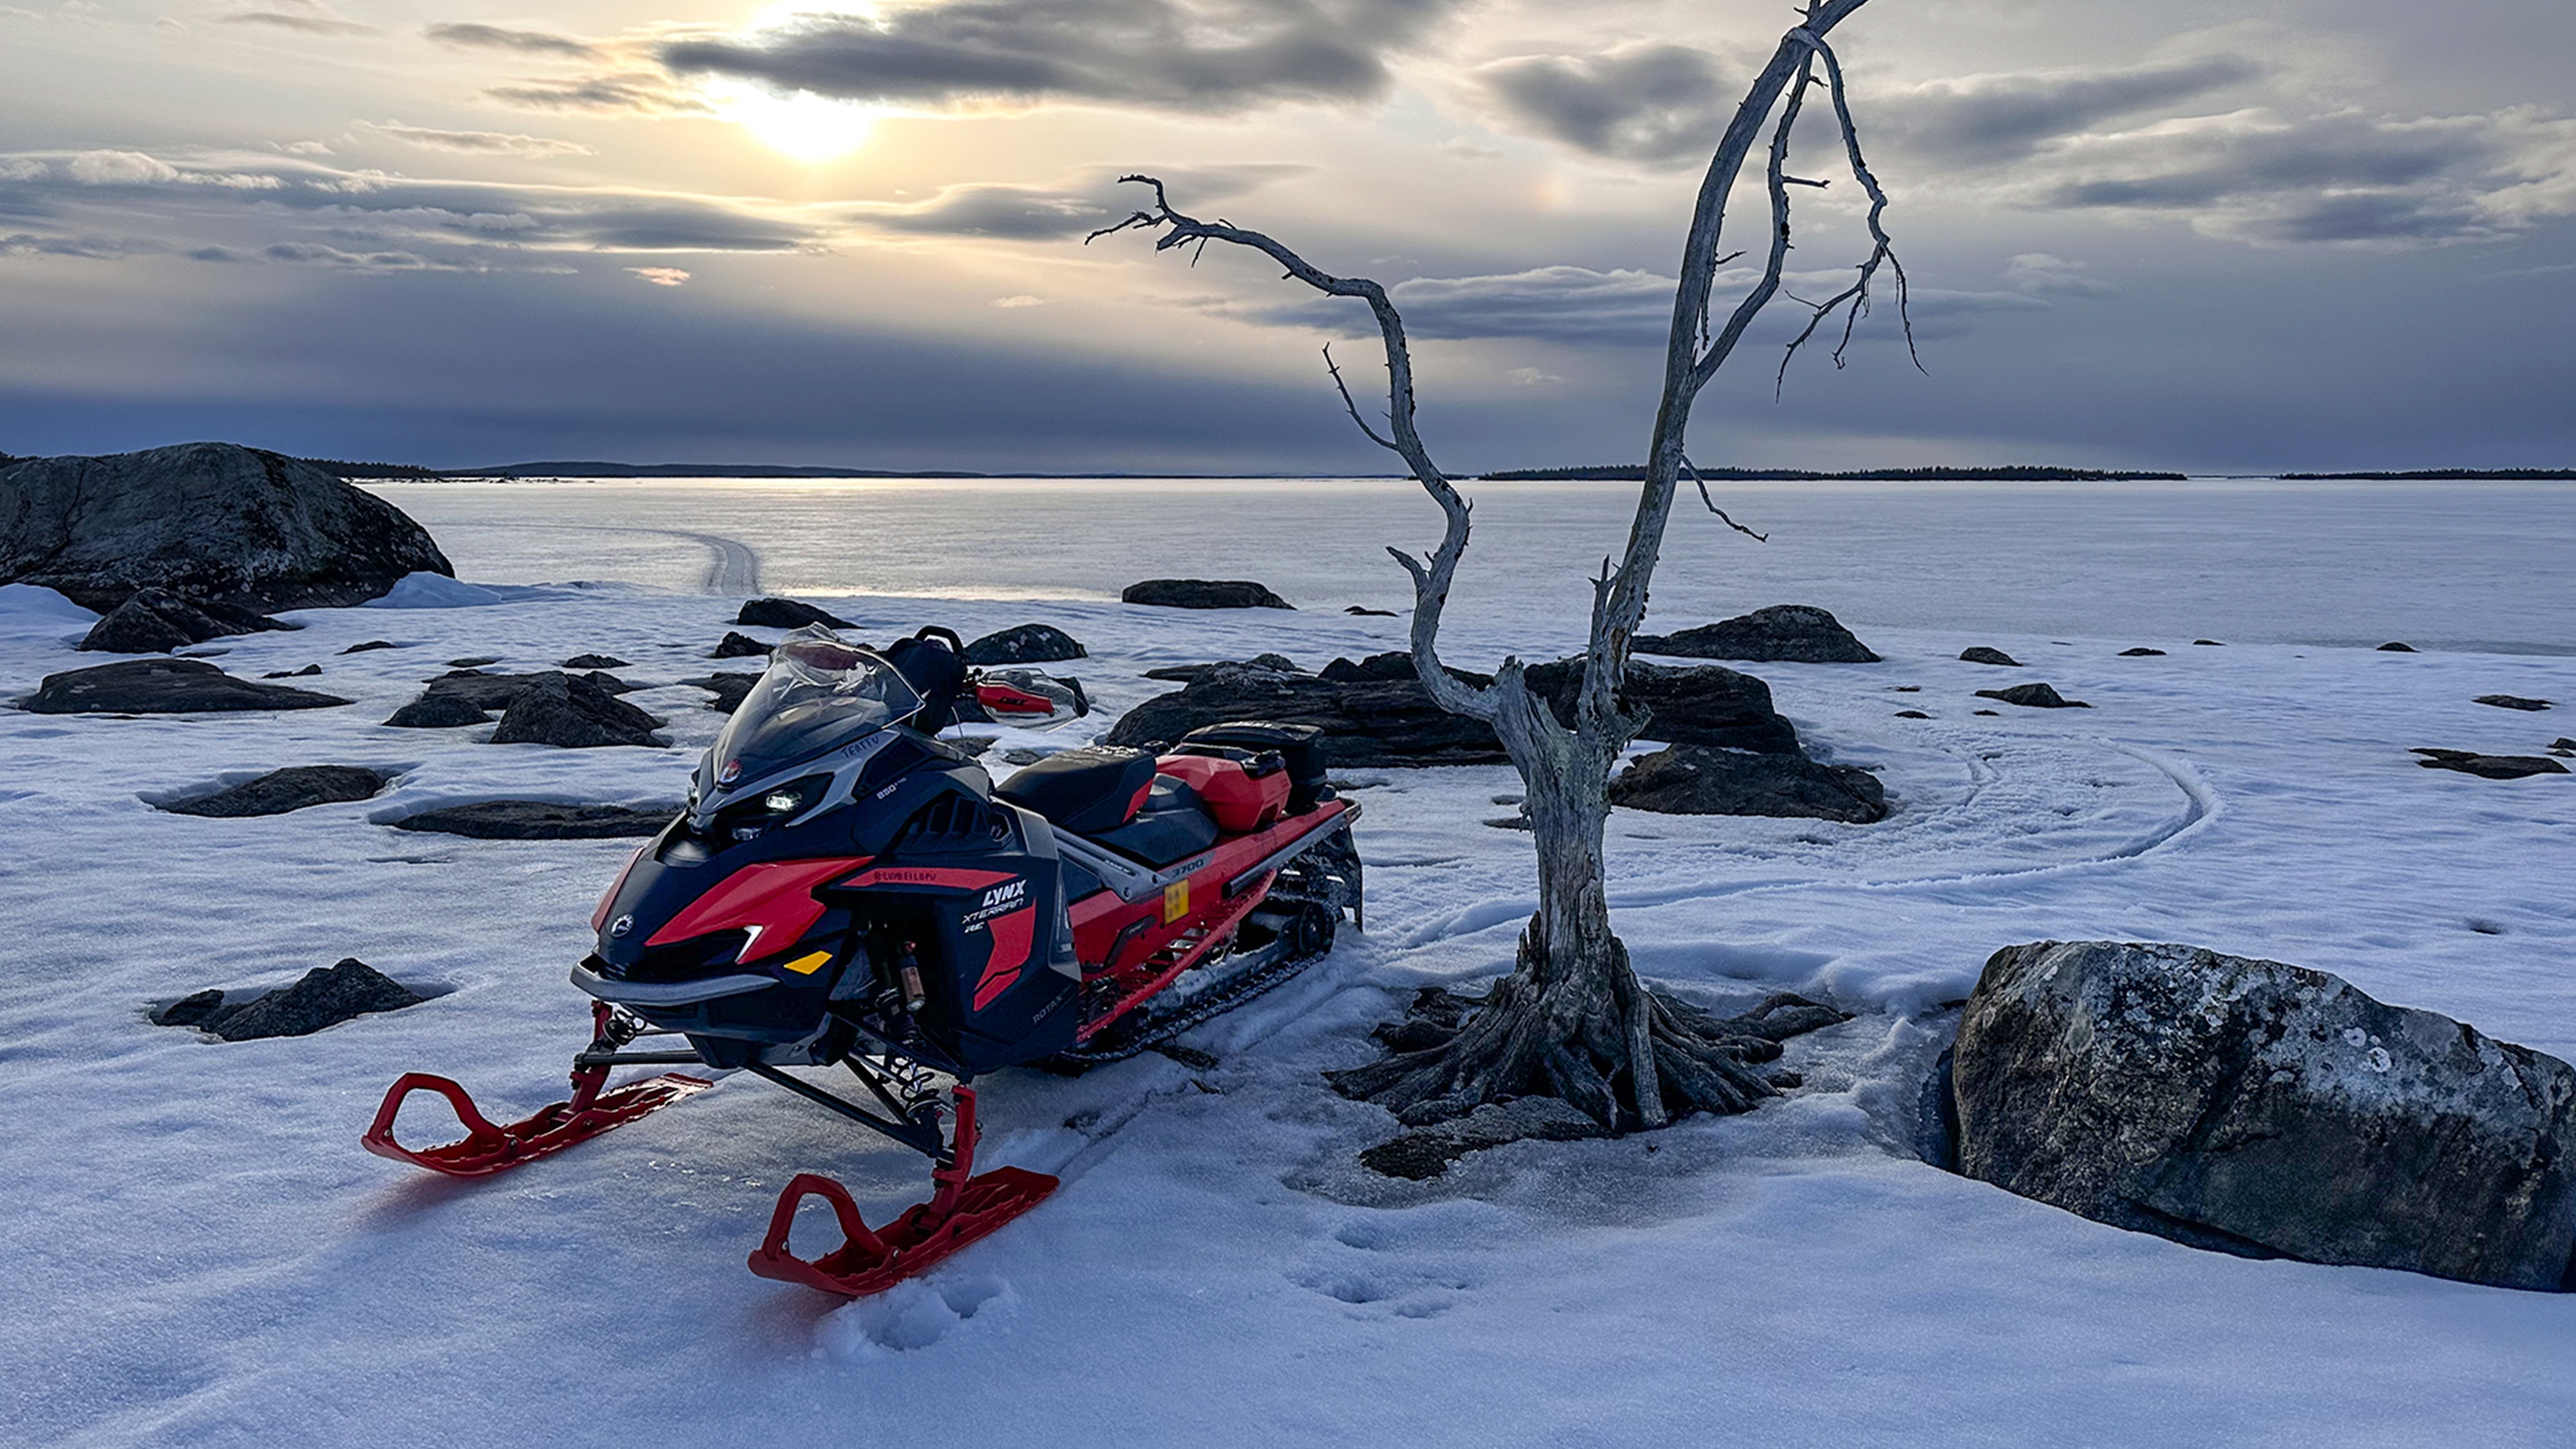 Lynx Xterrain RE 850 E-TEC crossover snowmobile parked on a shore of frozen lake